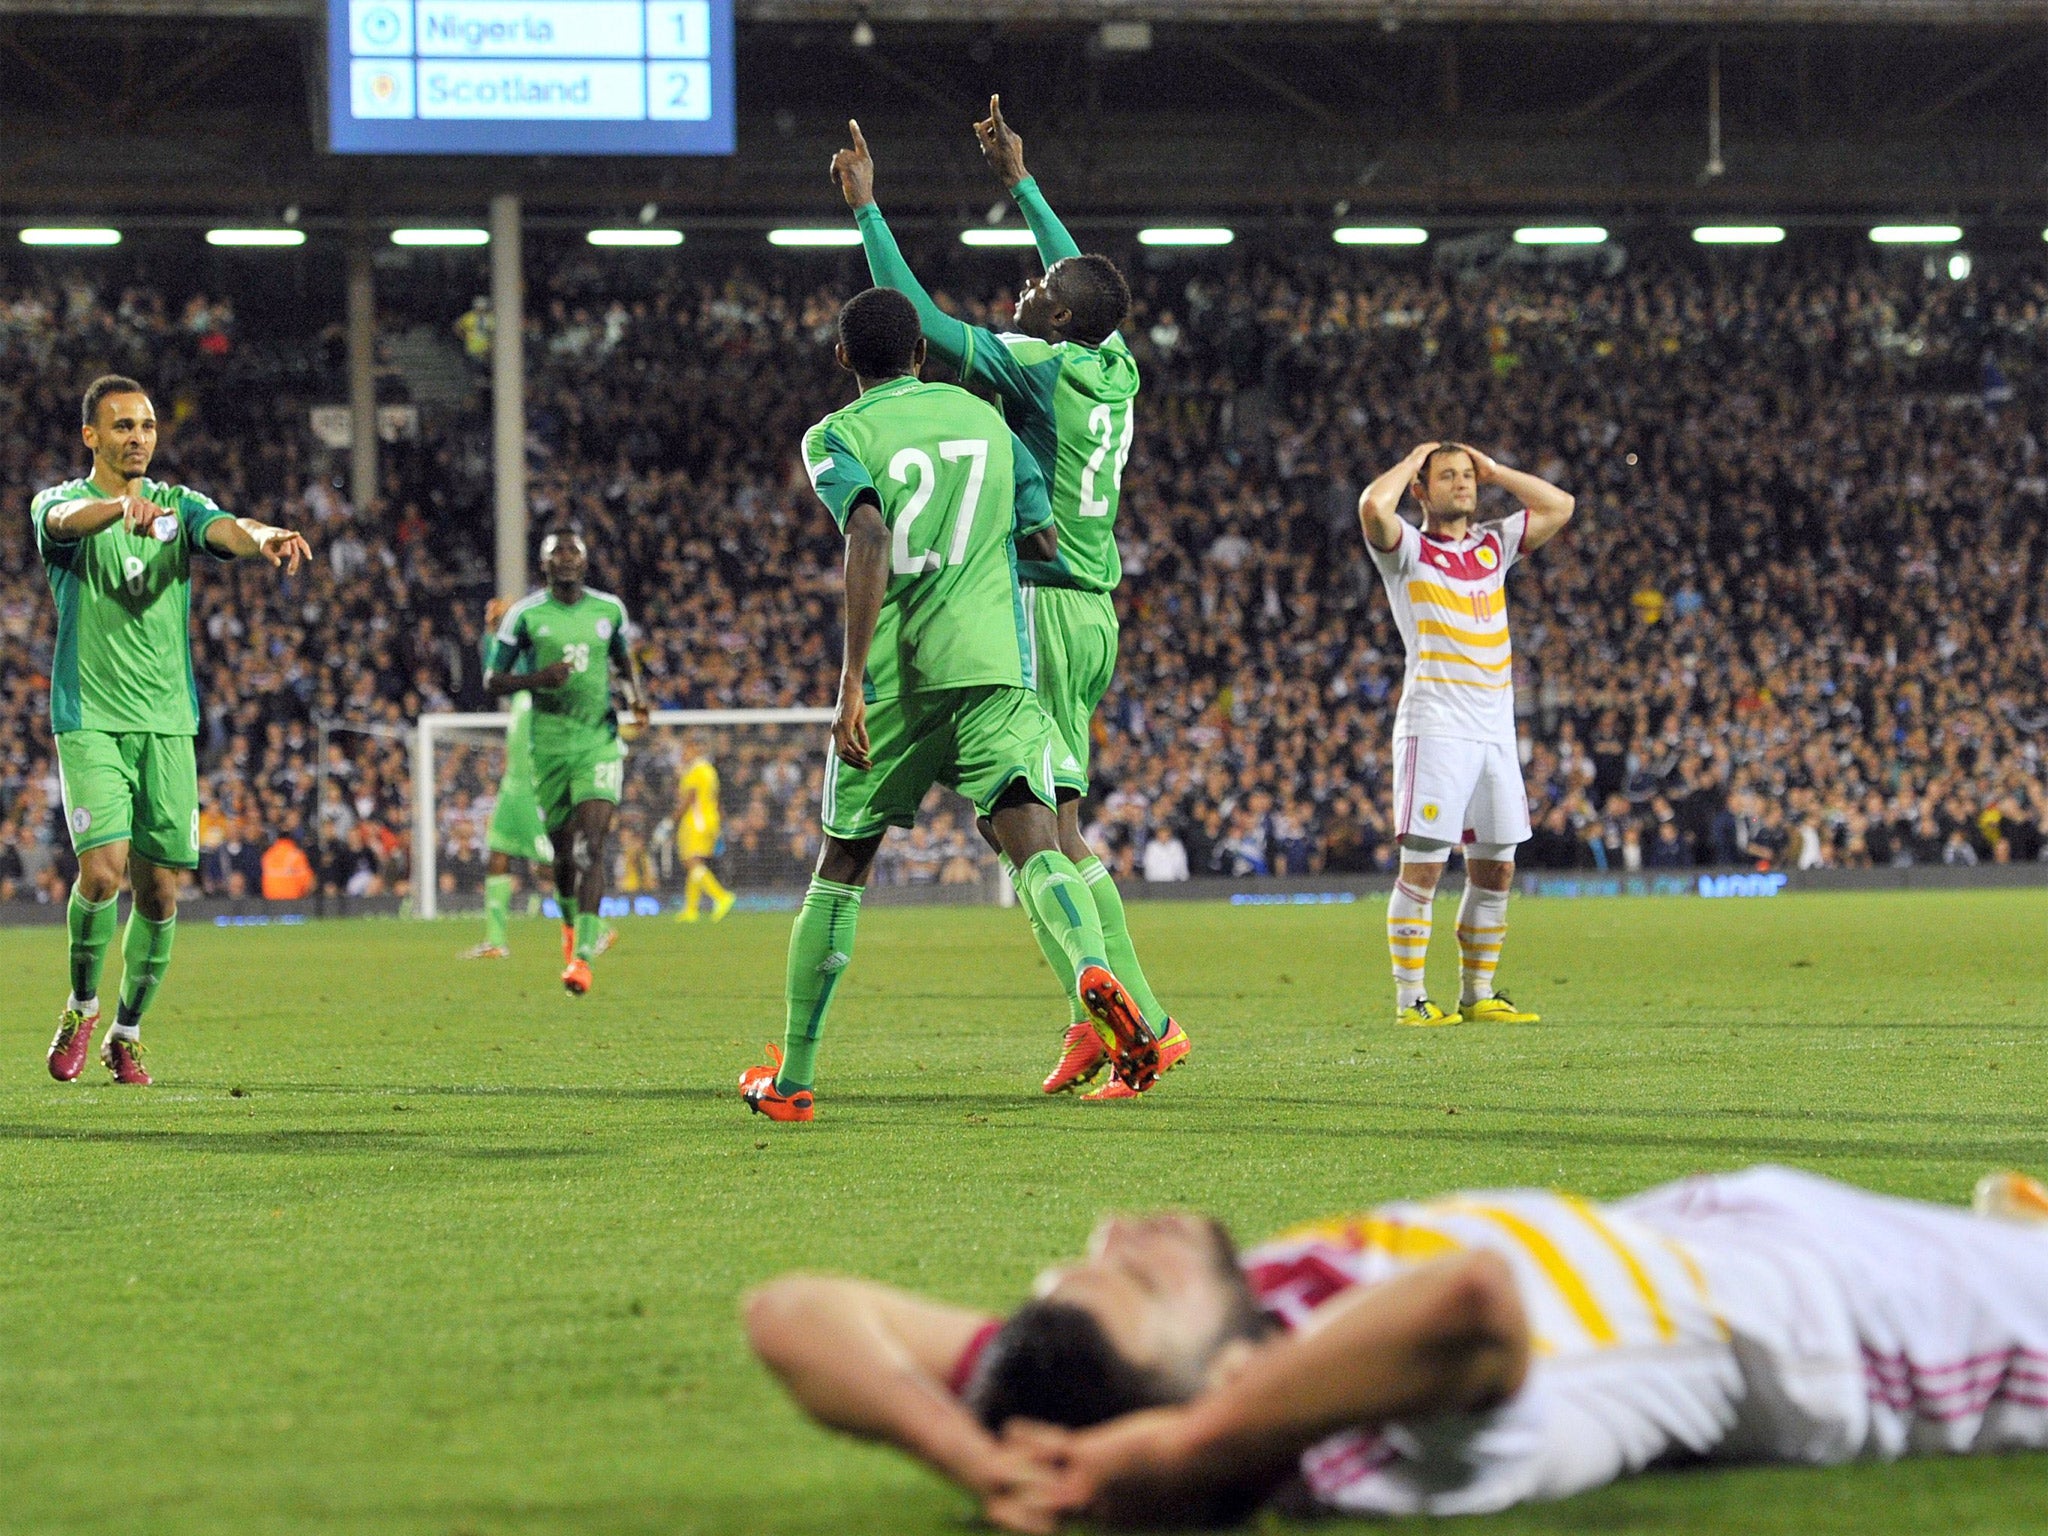 Nigeria striker Uche Nwofor celebrates scoring his team's second goal